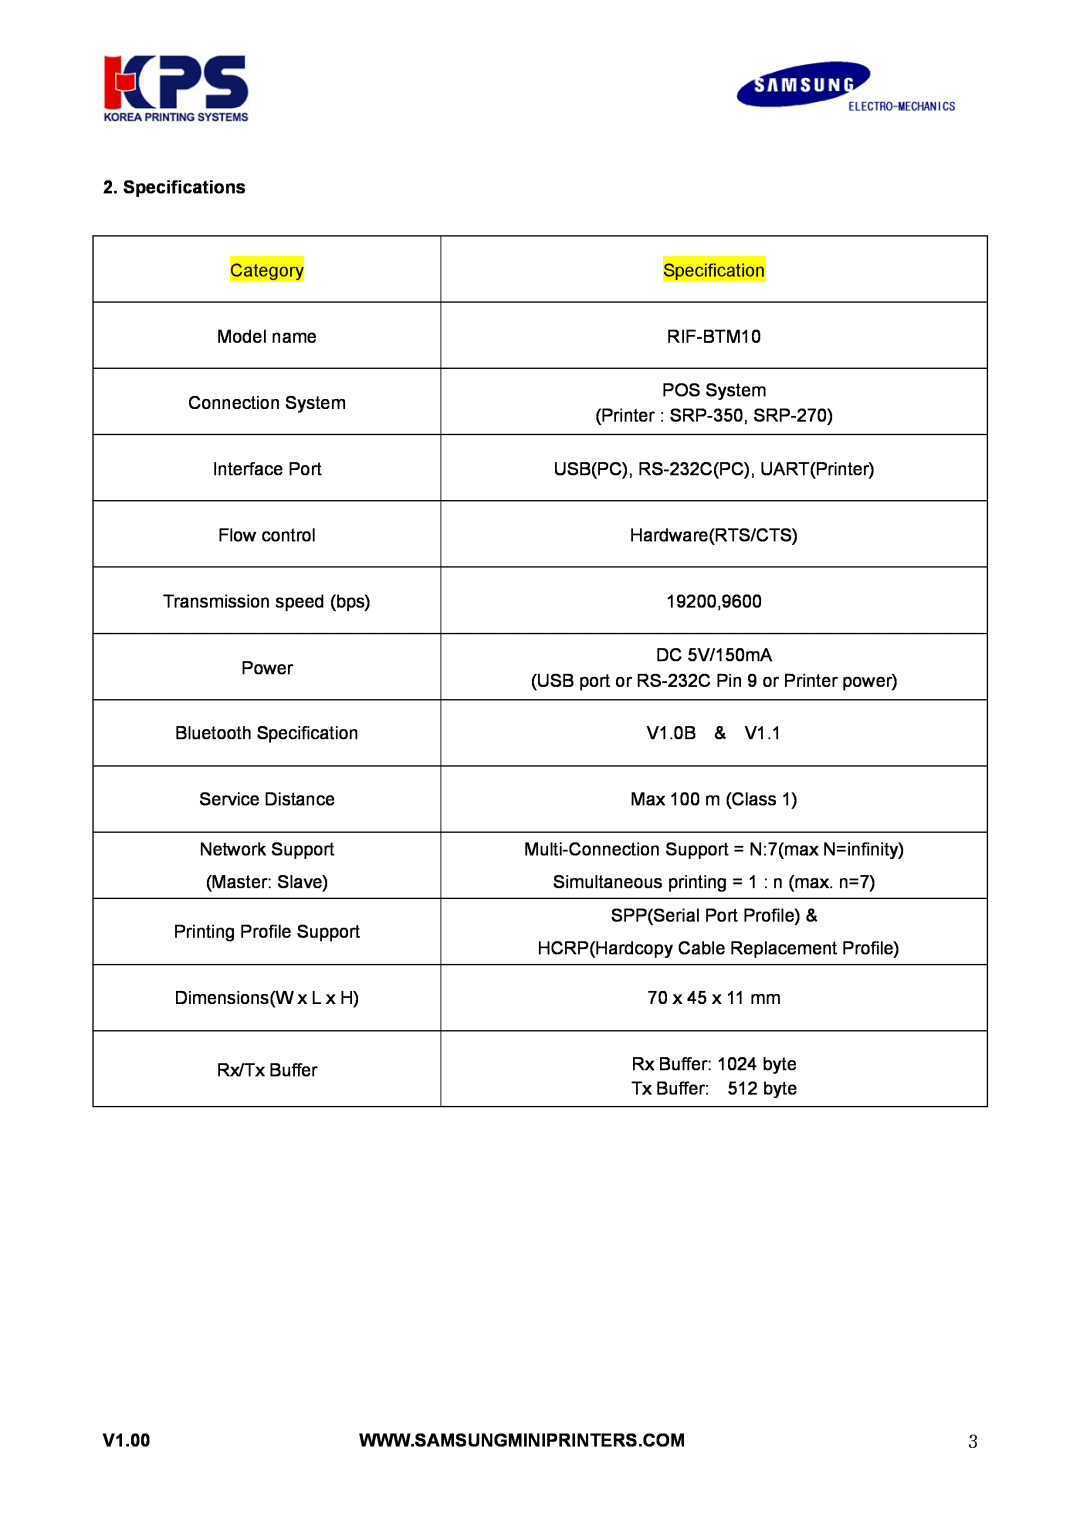 Samsung RIF-BT10 user manual Category 